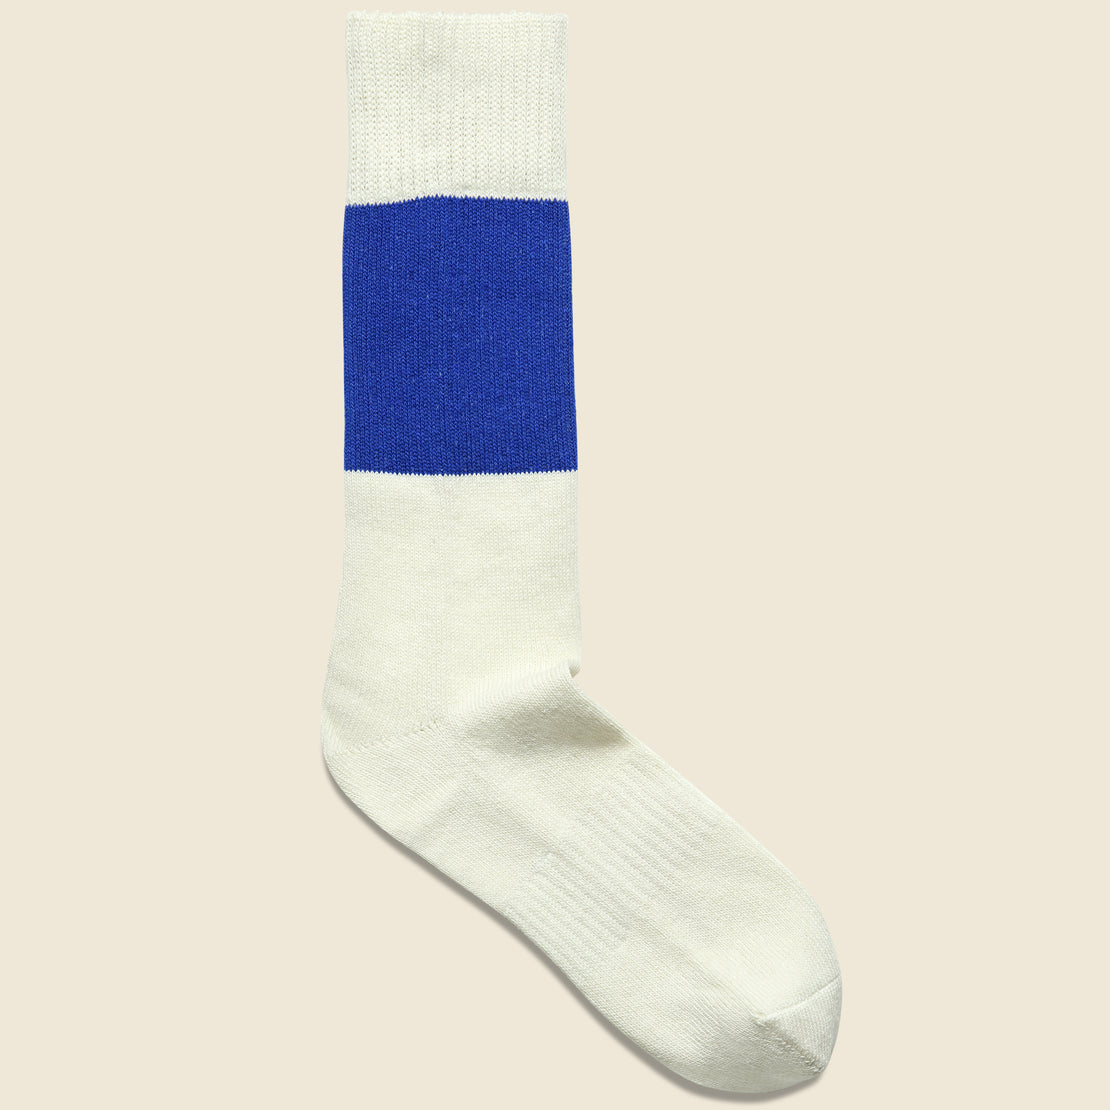 Richer Poorer Rigby Sock - Blue/White